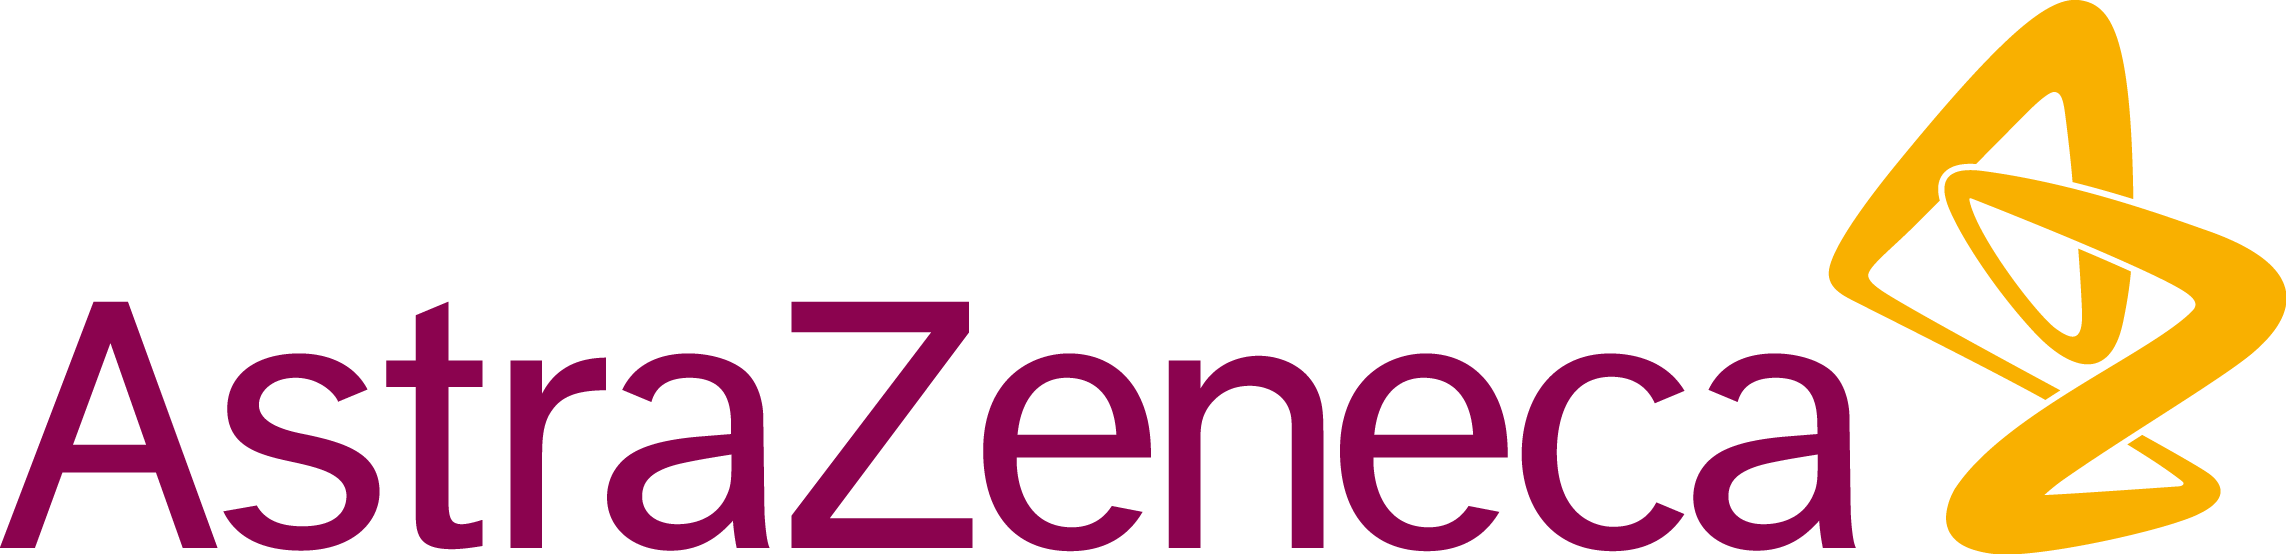 AstraZeneca White Logo